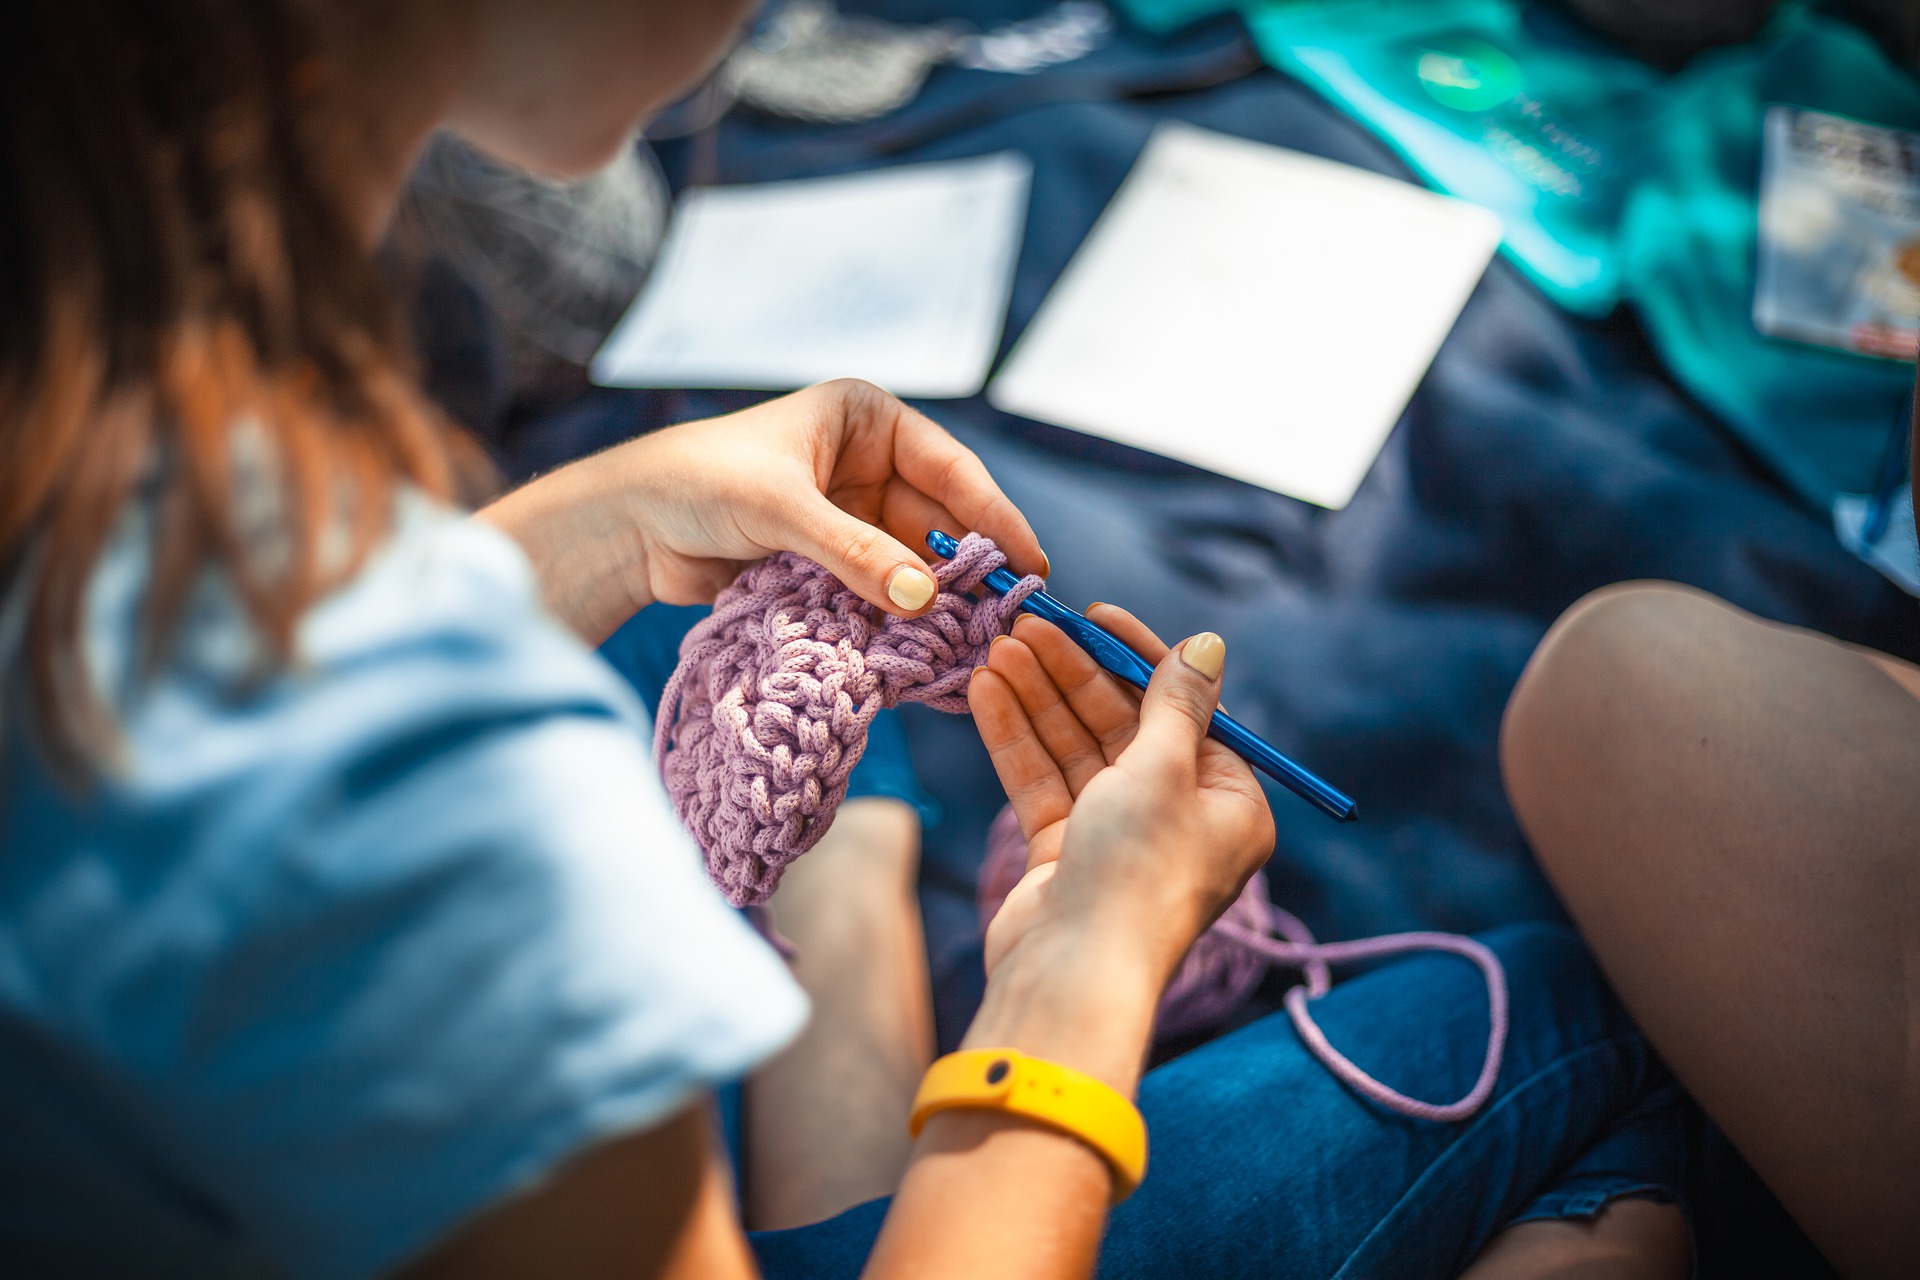 Hand knitting or how to start knitting